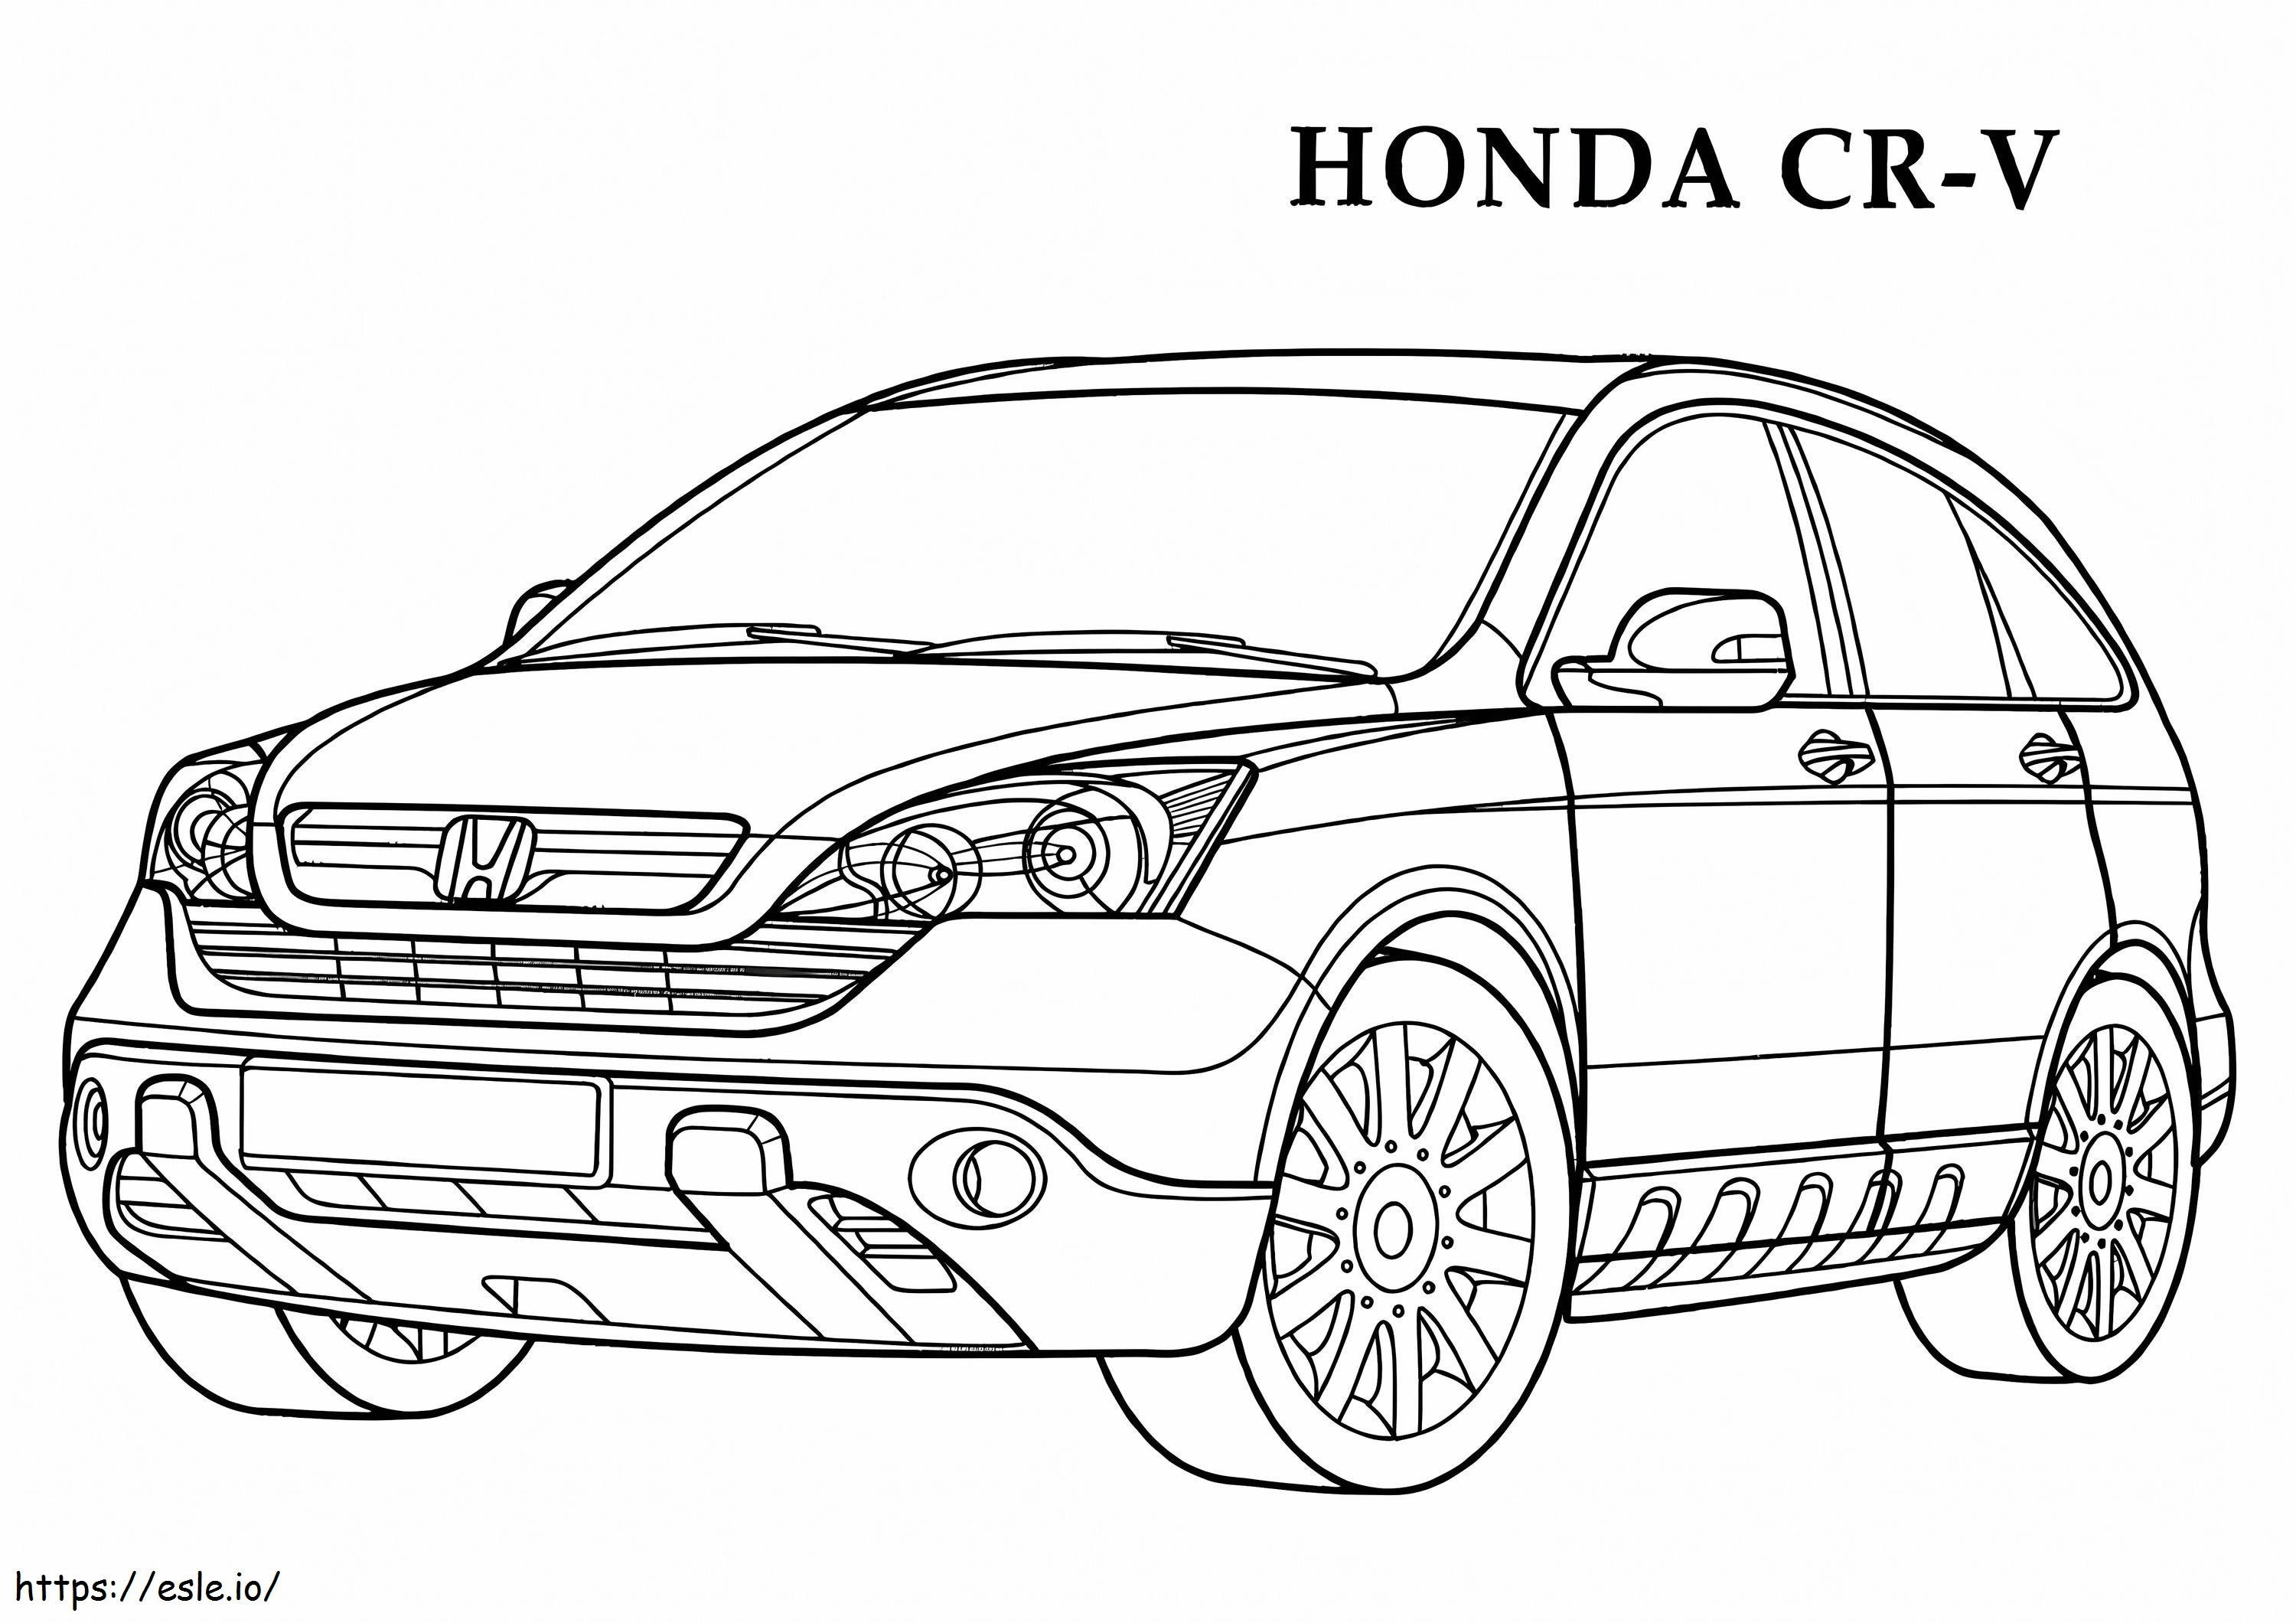 Honda CRV2 kleurplaat kleurplaat